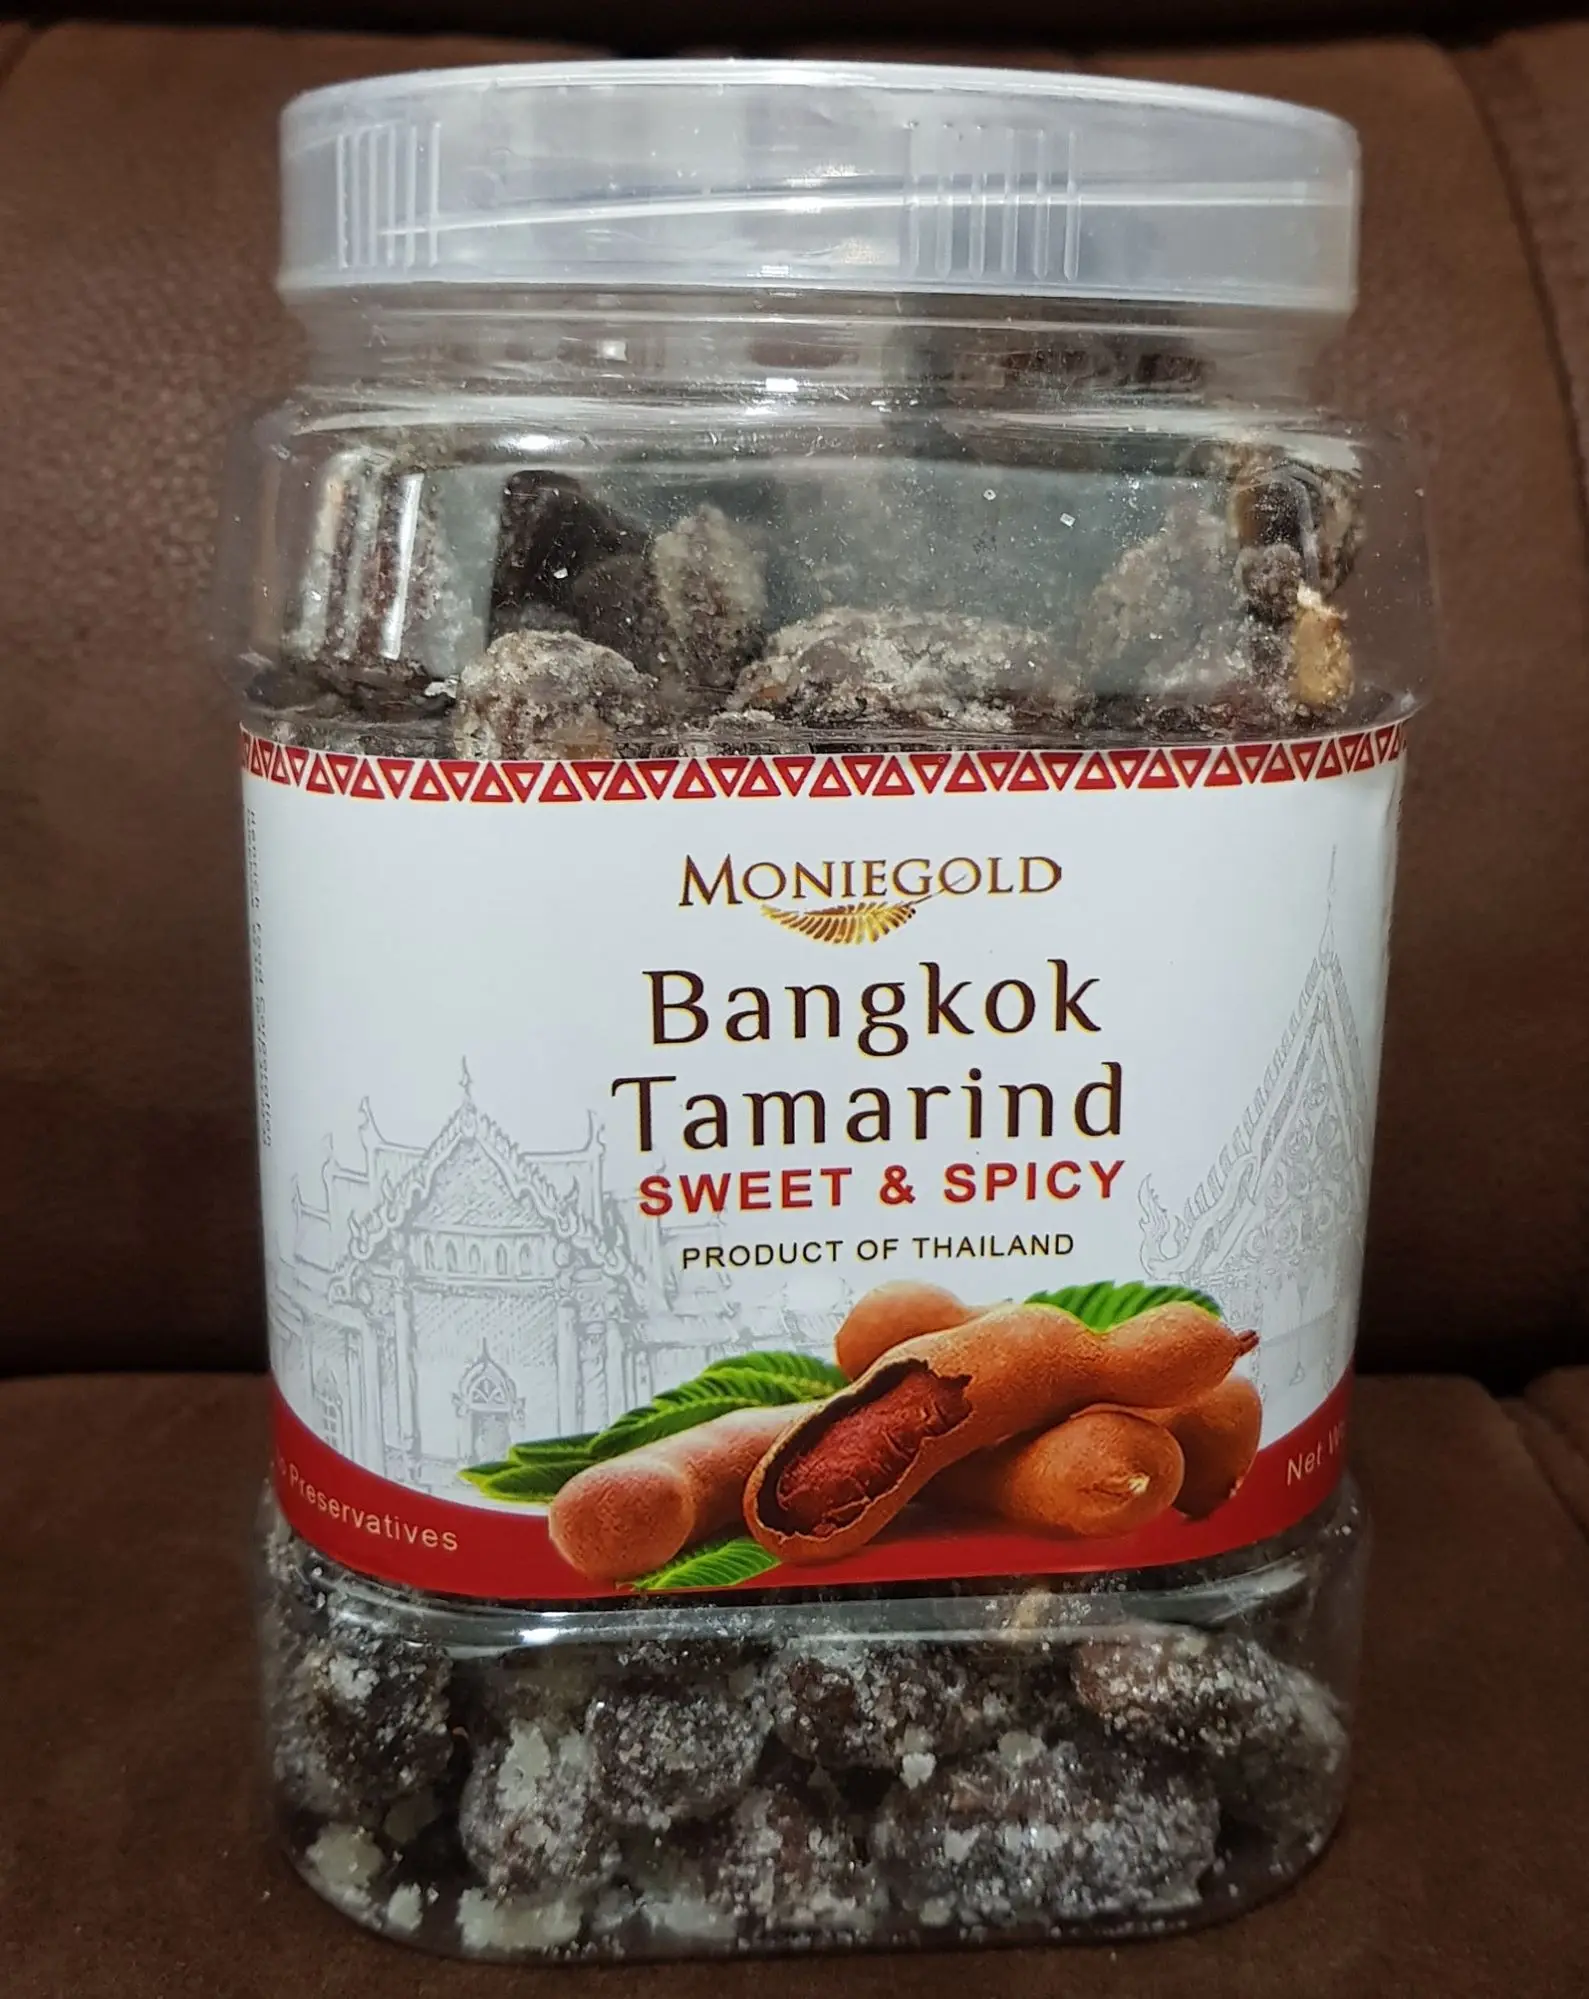 Mialendra's Moniegold Bangkok Tamarind (Sweet and Spicy Tamarind)